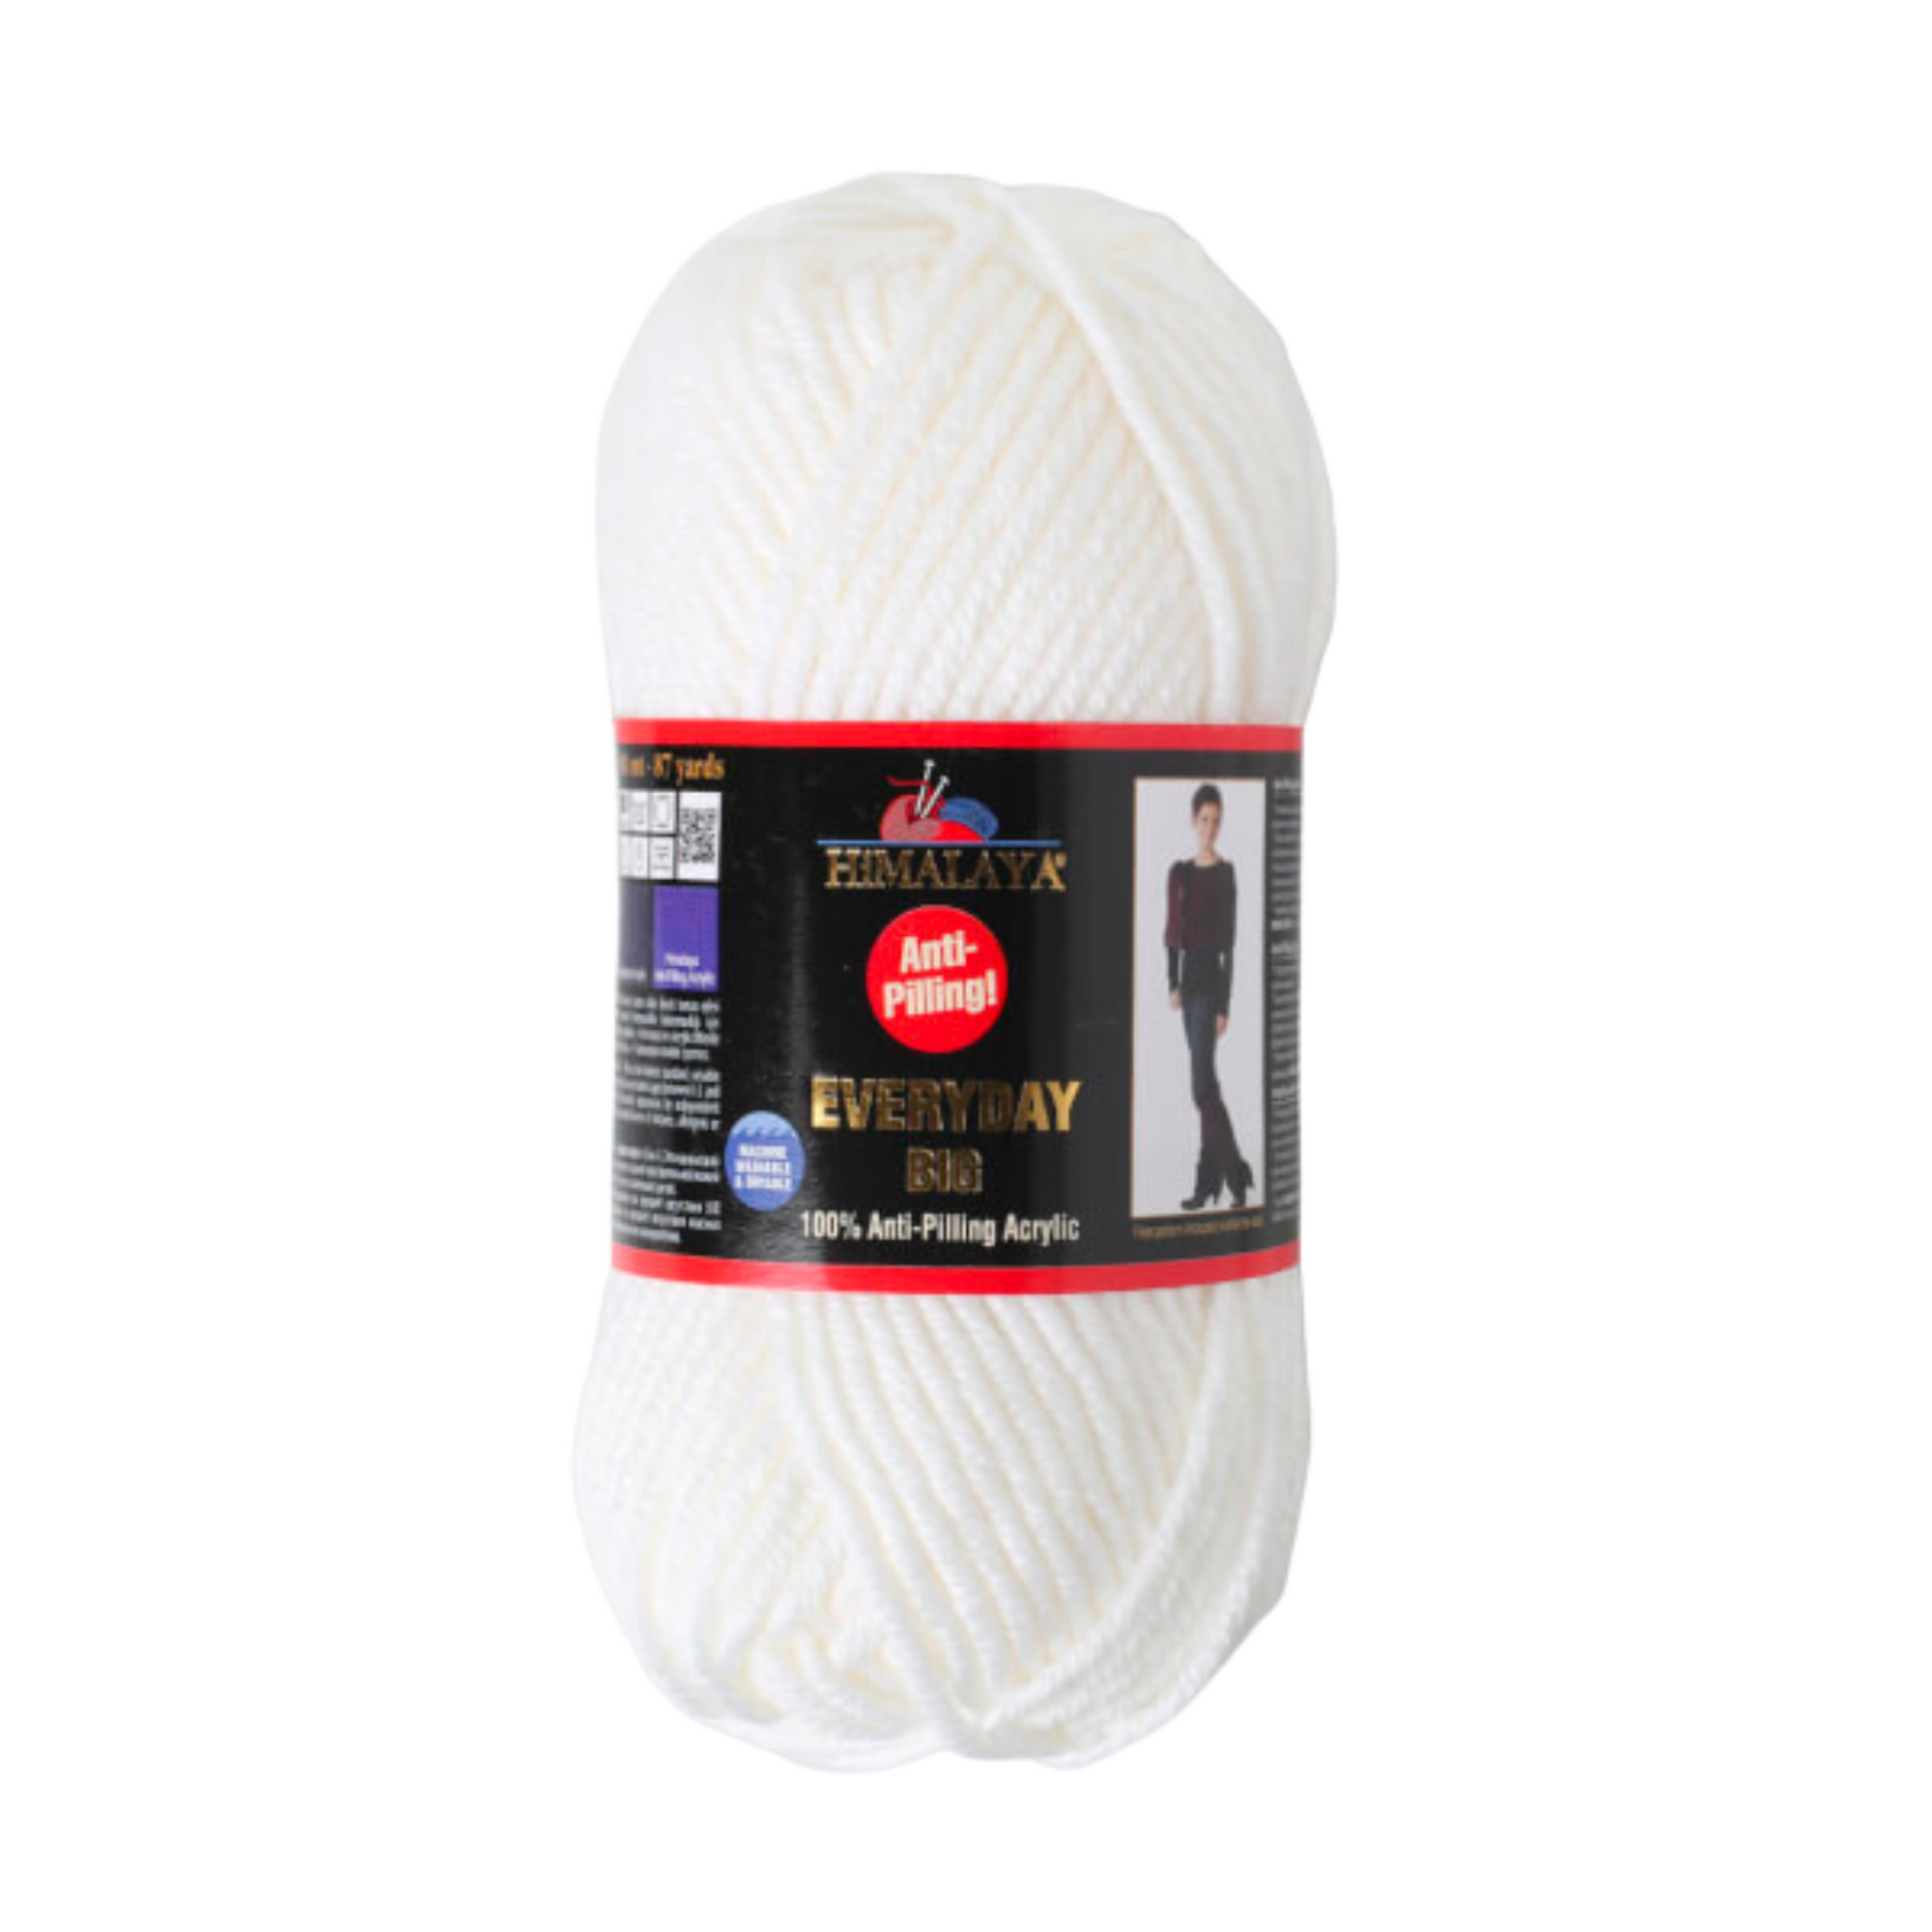 Himalaya Everyday 100% Anti-Pilling Acrylic Yarn, Brick Yellow - 70806